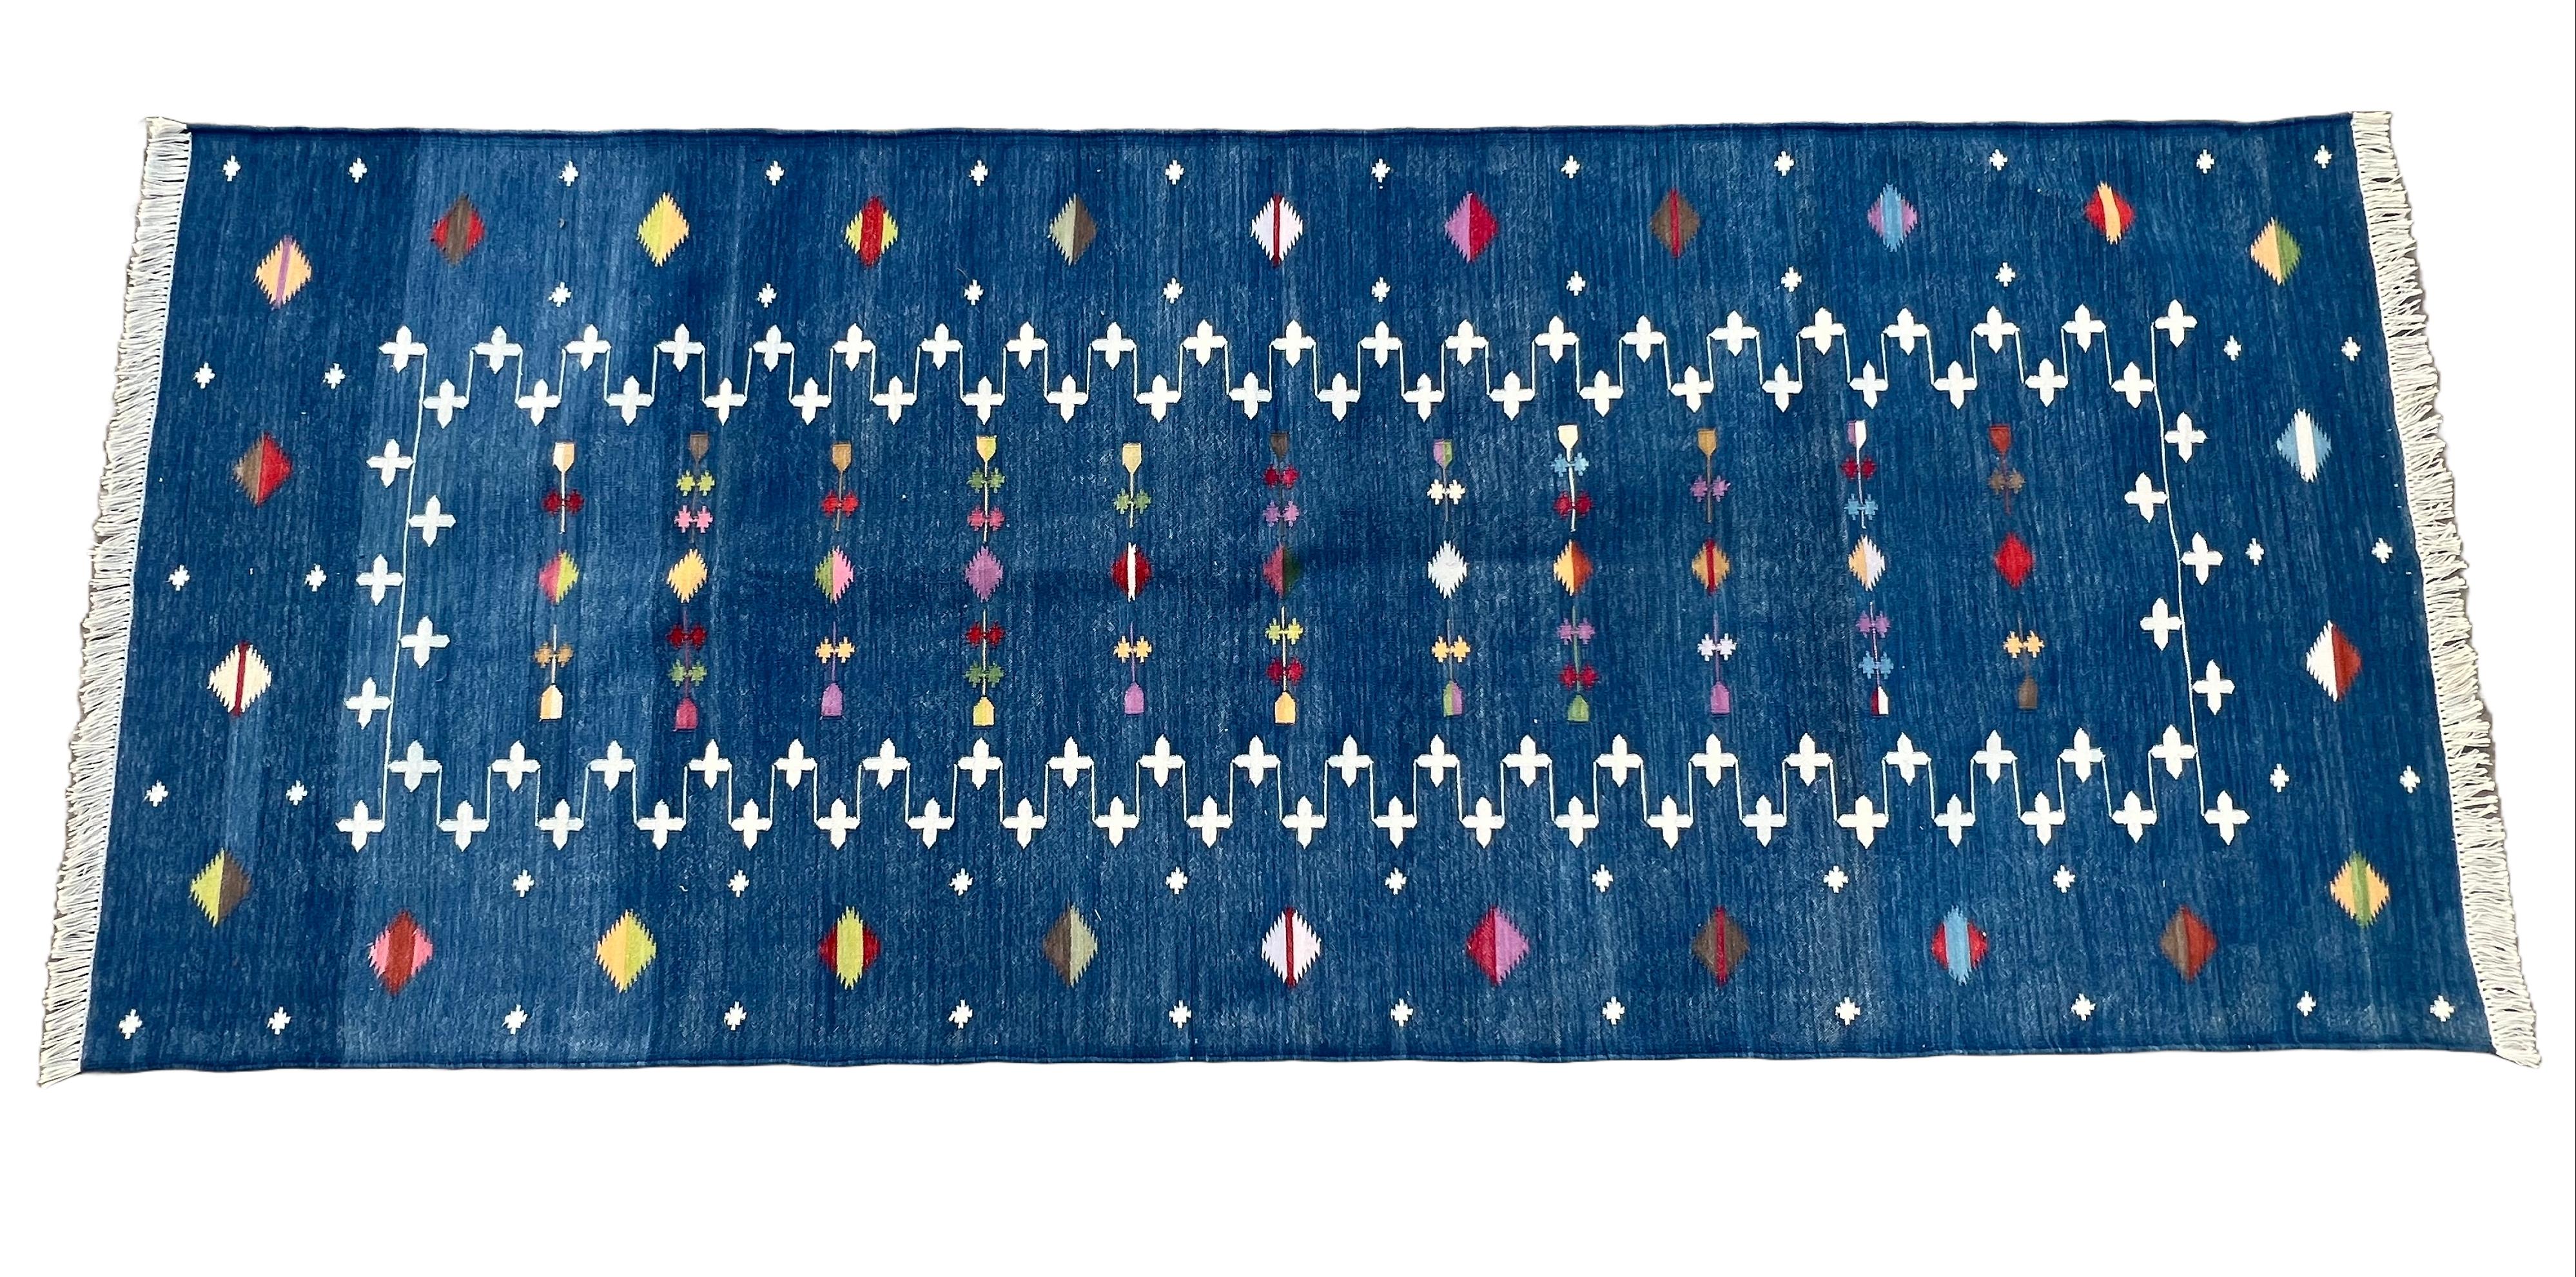 Hand-Woven Handmade Cotton Area Flat Weave Runner, Indigo Blue & White Indian Dhurrie Rug For Sale